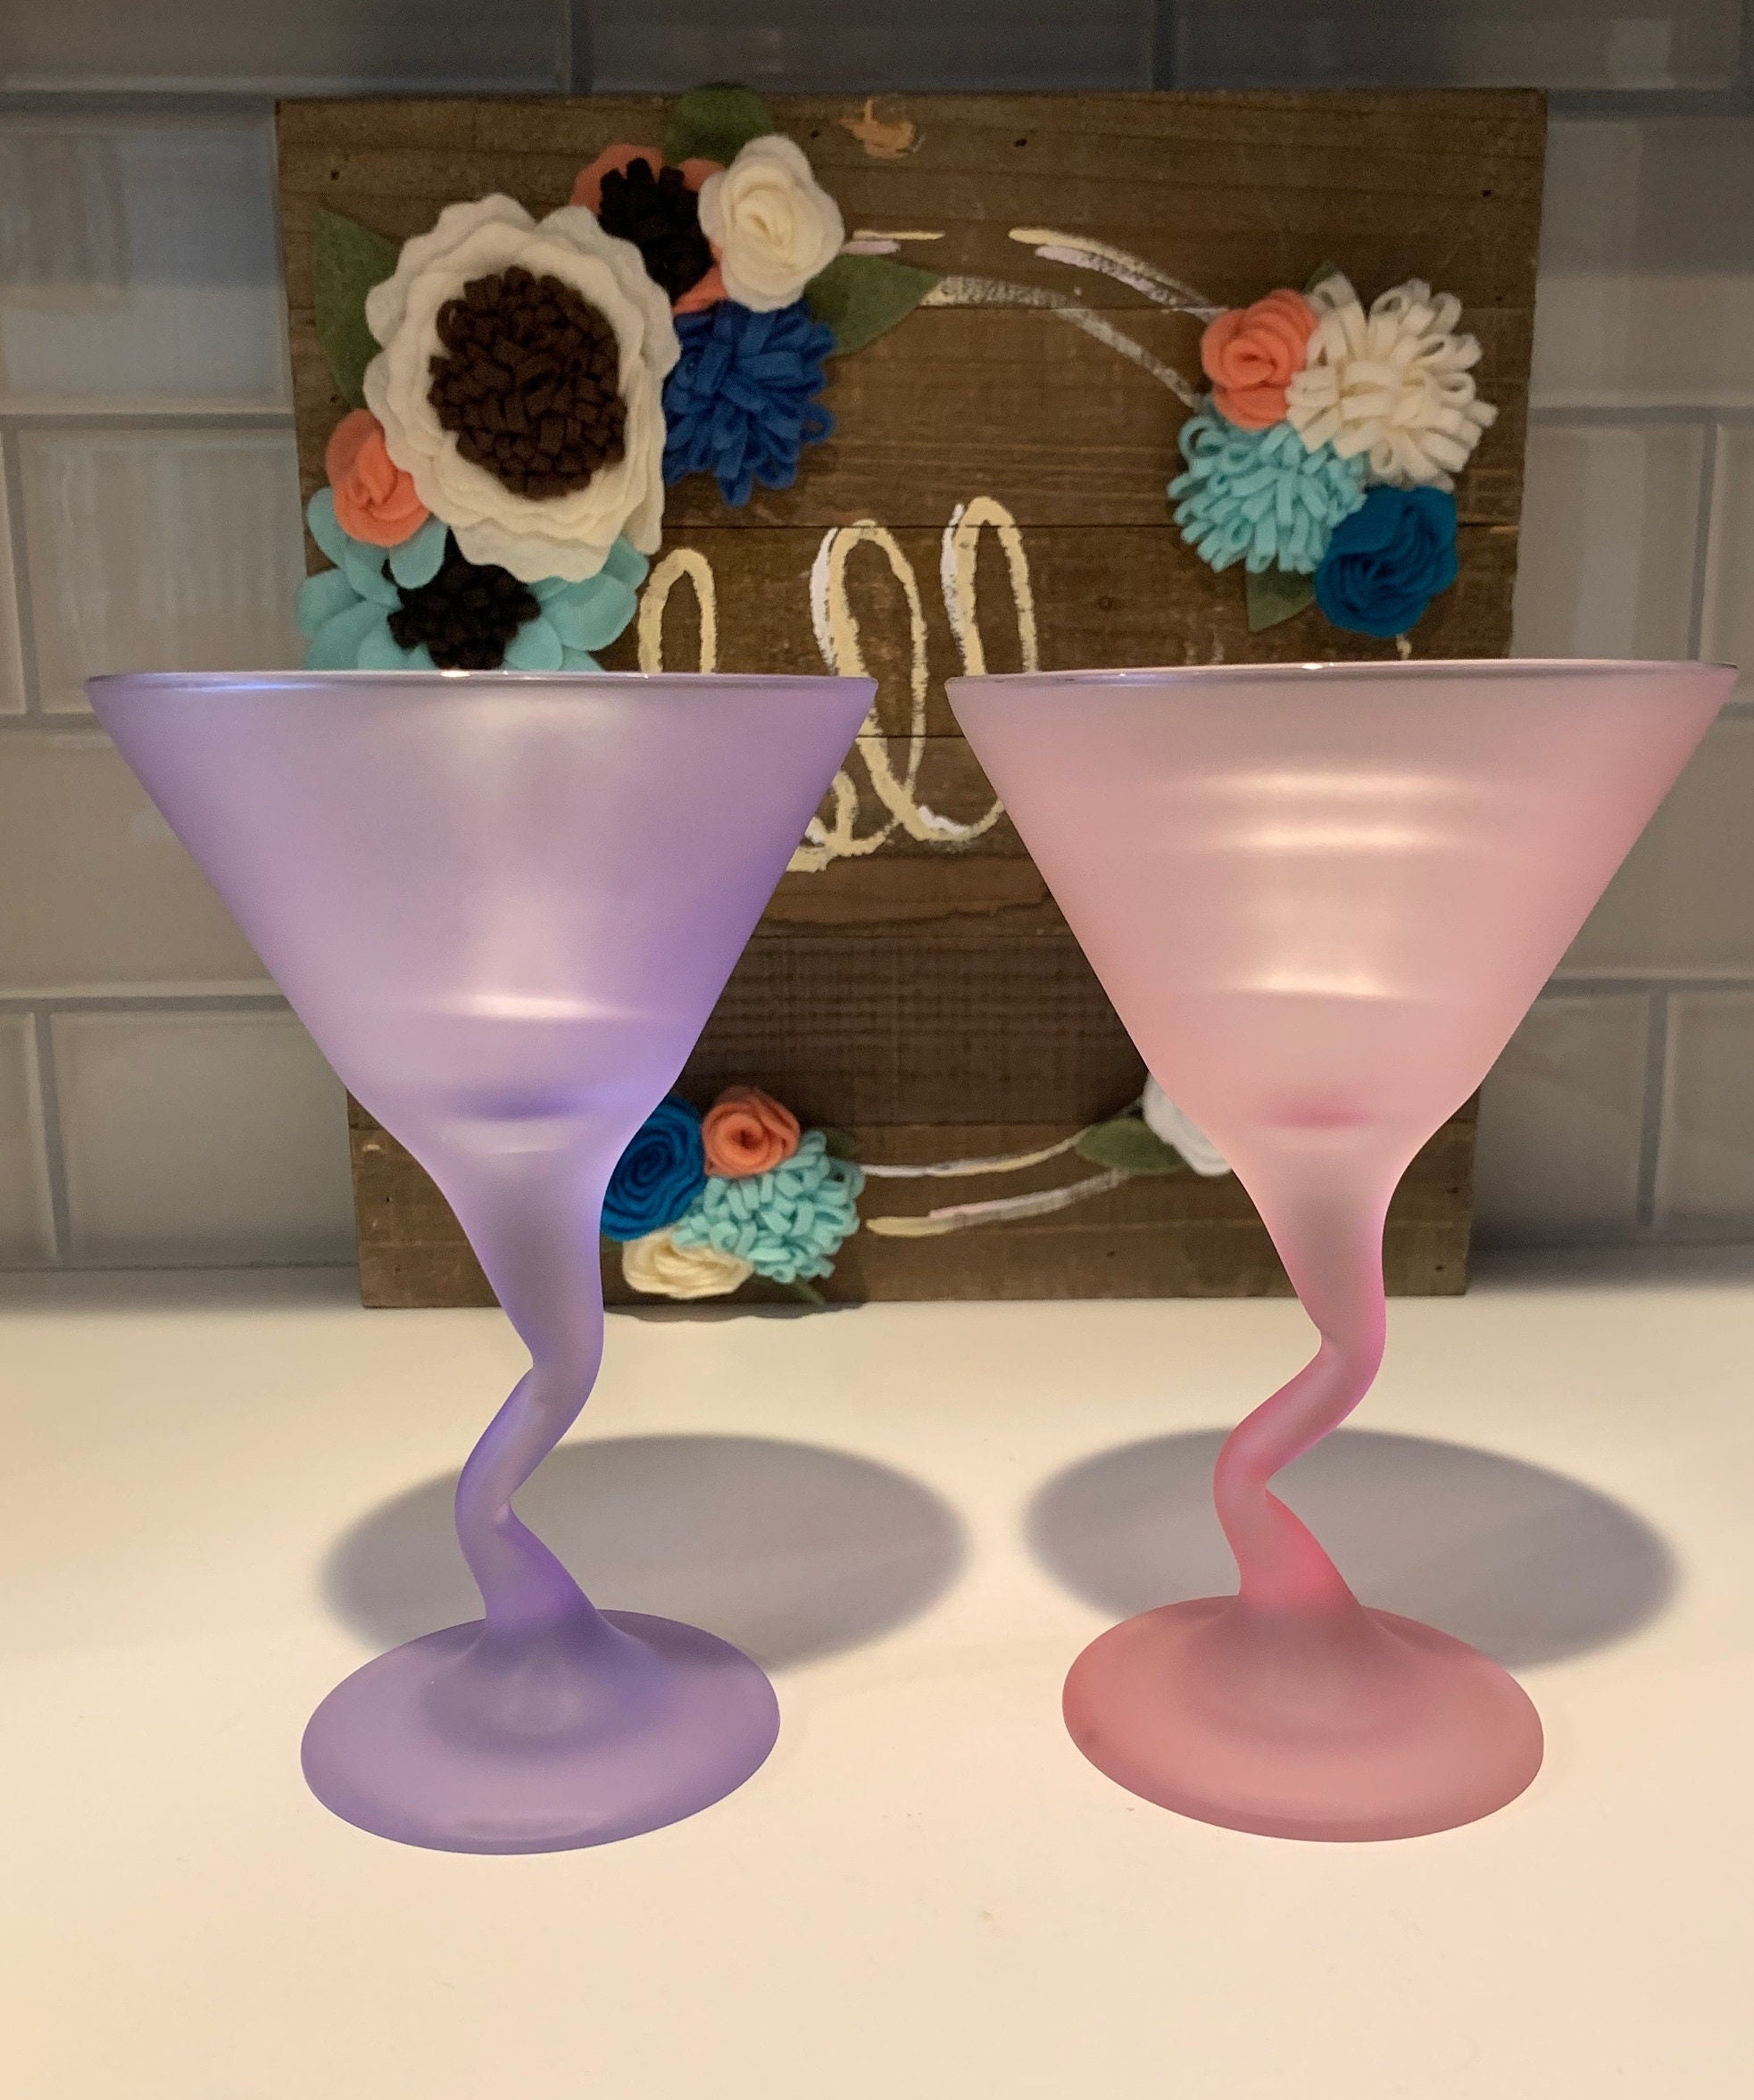 x1 Stemless Crystal Wine Glass 3D Spring Pink Flower Inside NEW